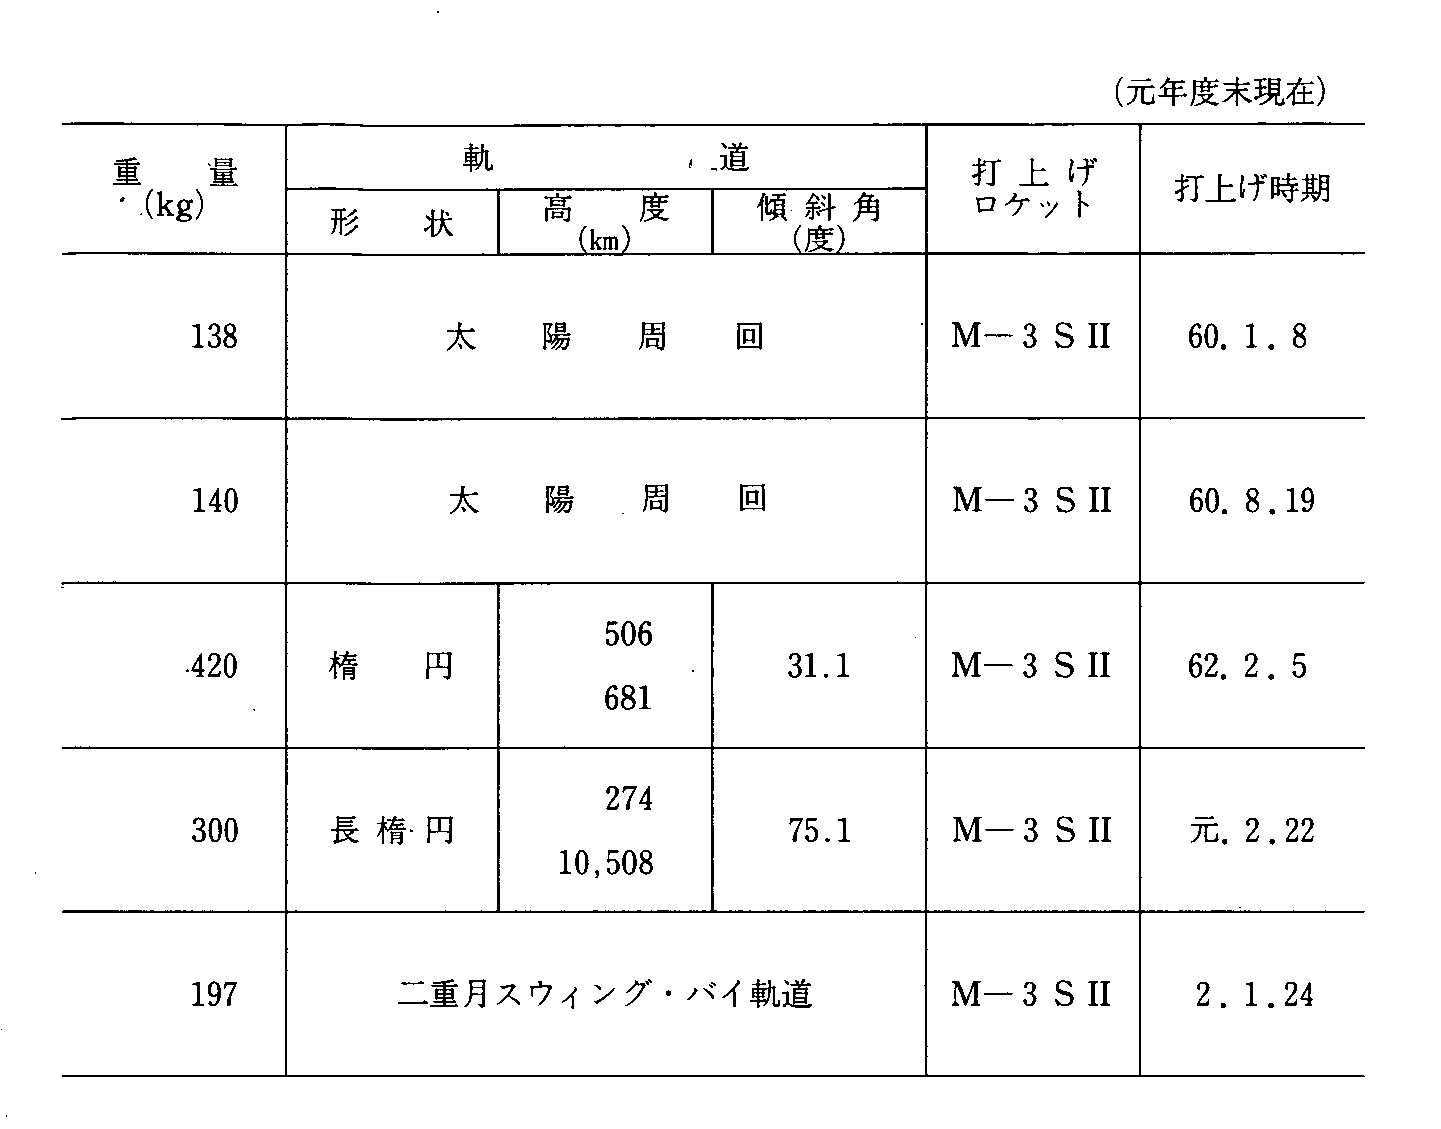 7-7 Ȋw̐lHq(^p)(Nx)(2)